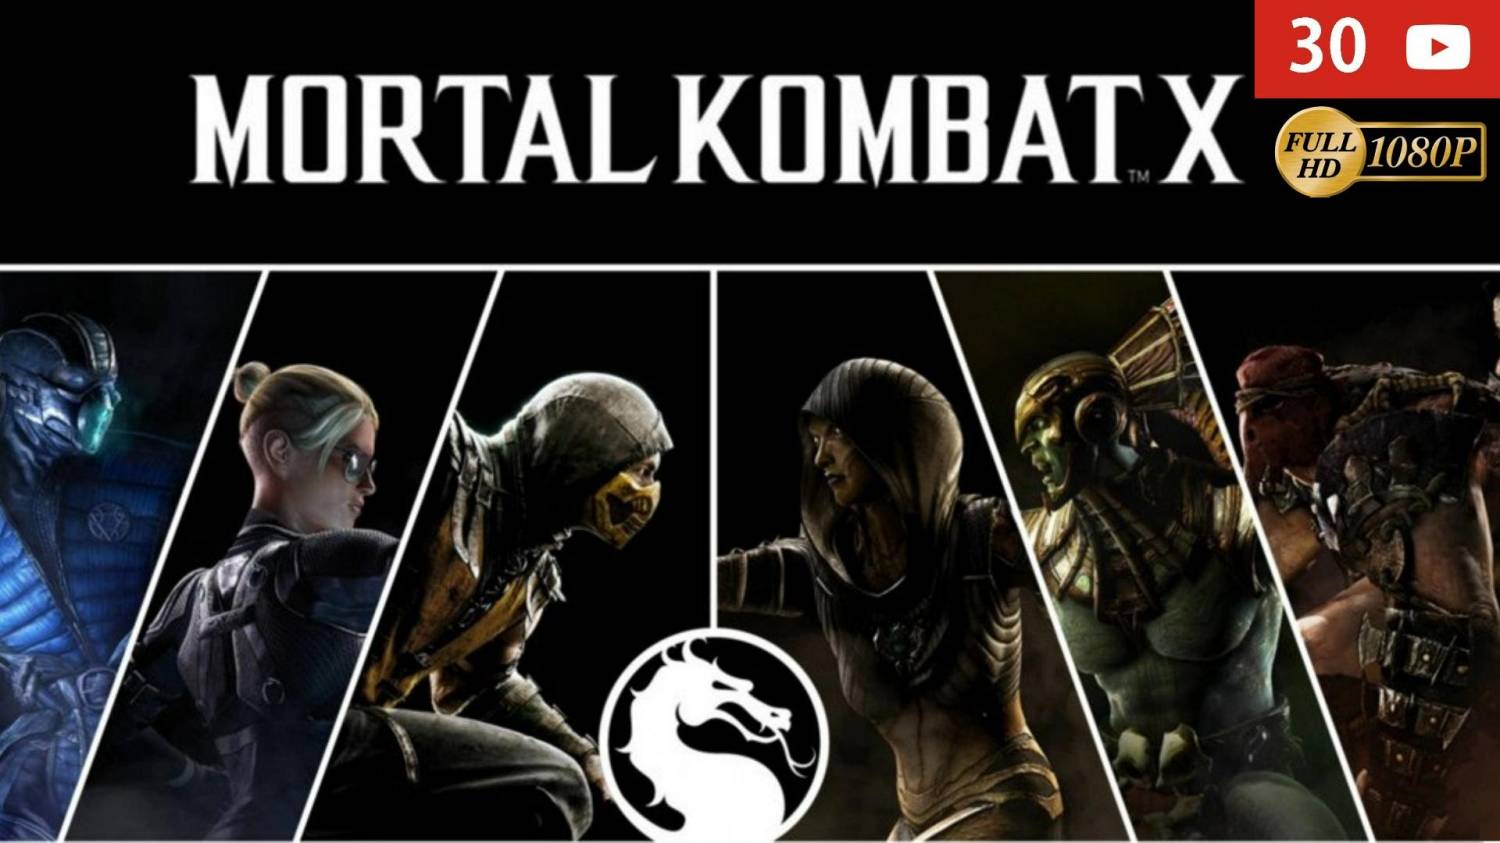 Mortal Kombat X Pelicula Completa 2016 (Español Latino)